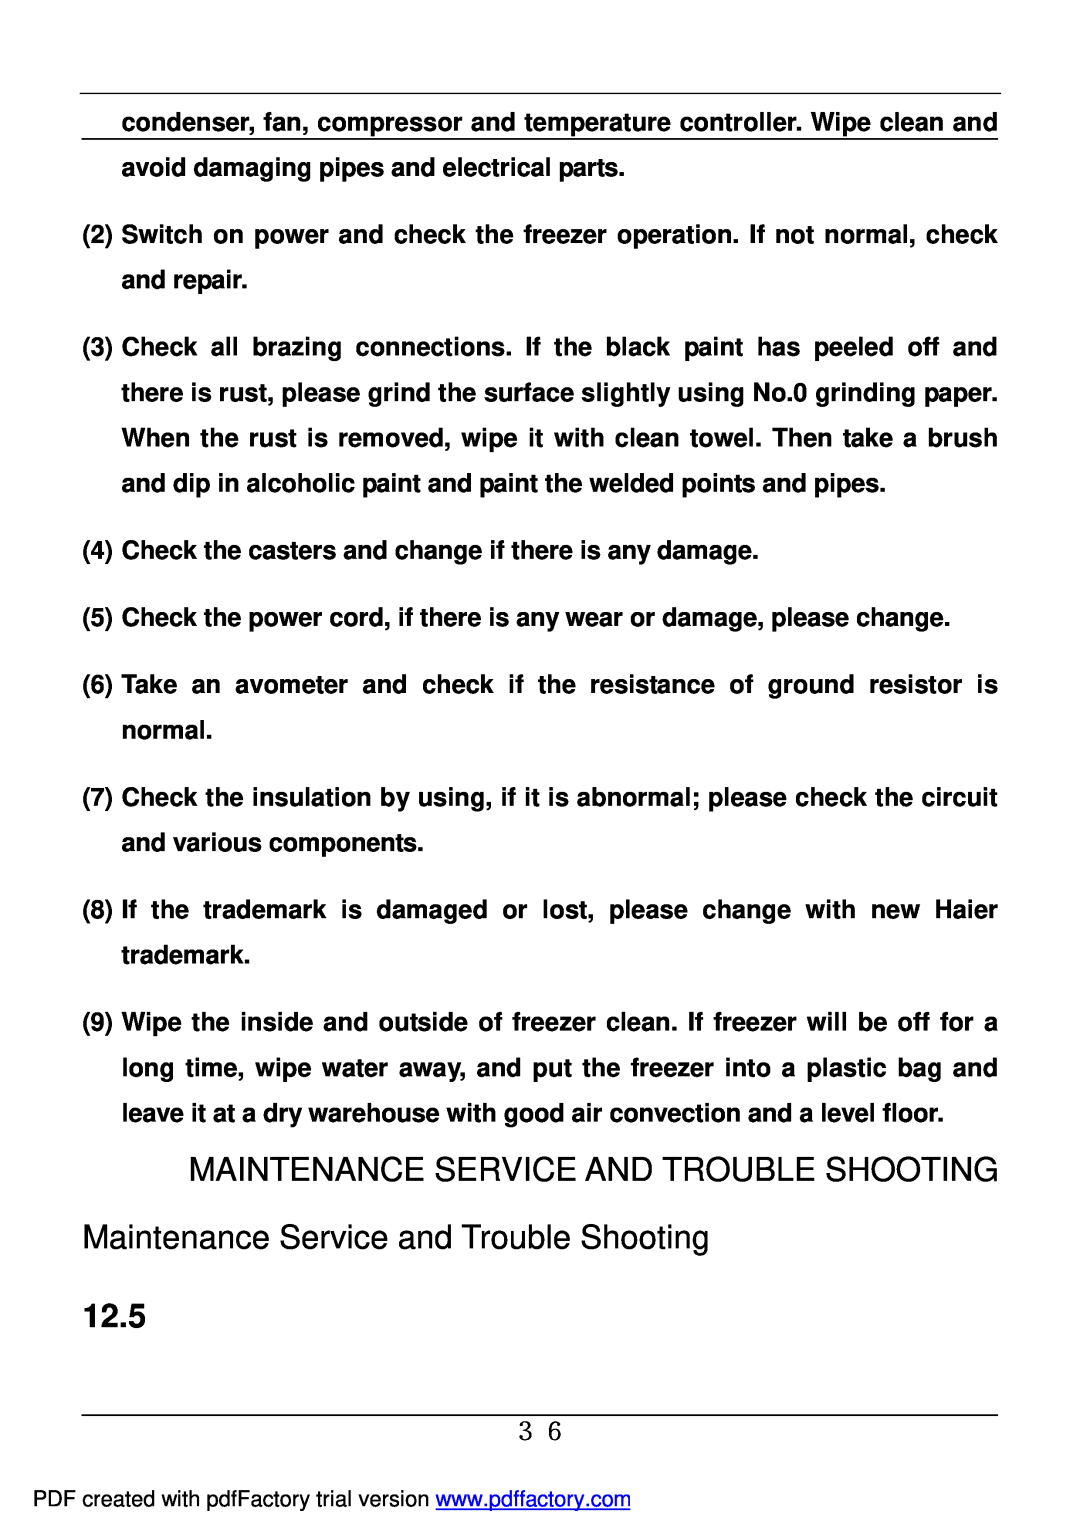 Haier BD-478A service manual 12.5, Maintenance Service And Trouble Shooting, Maintenance Service and Trouble Shooting 